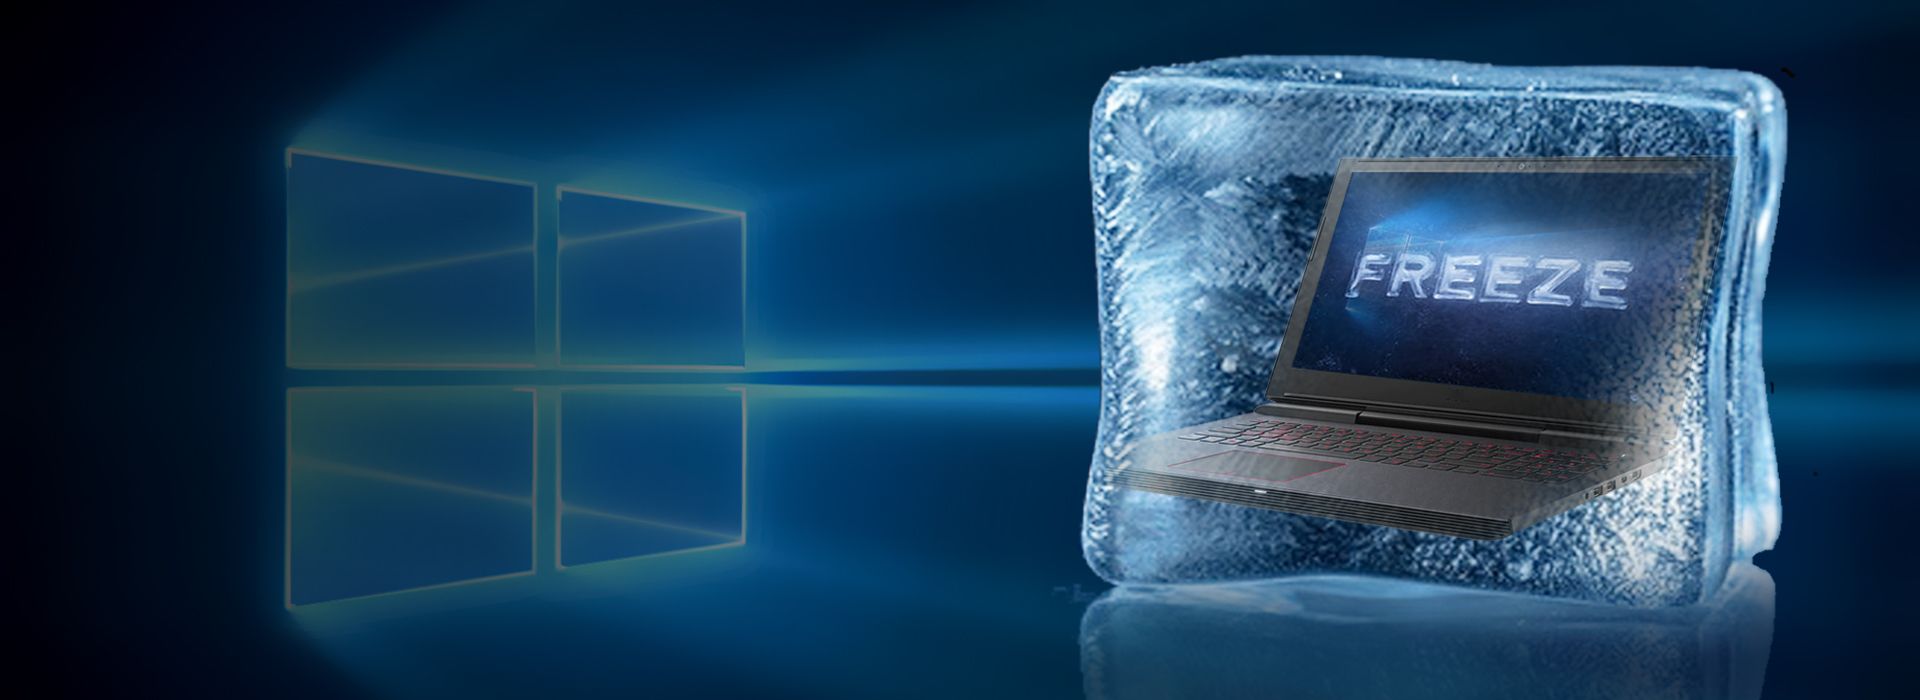 Windows 10 freezes randomly [Solved] - Driver Easy